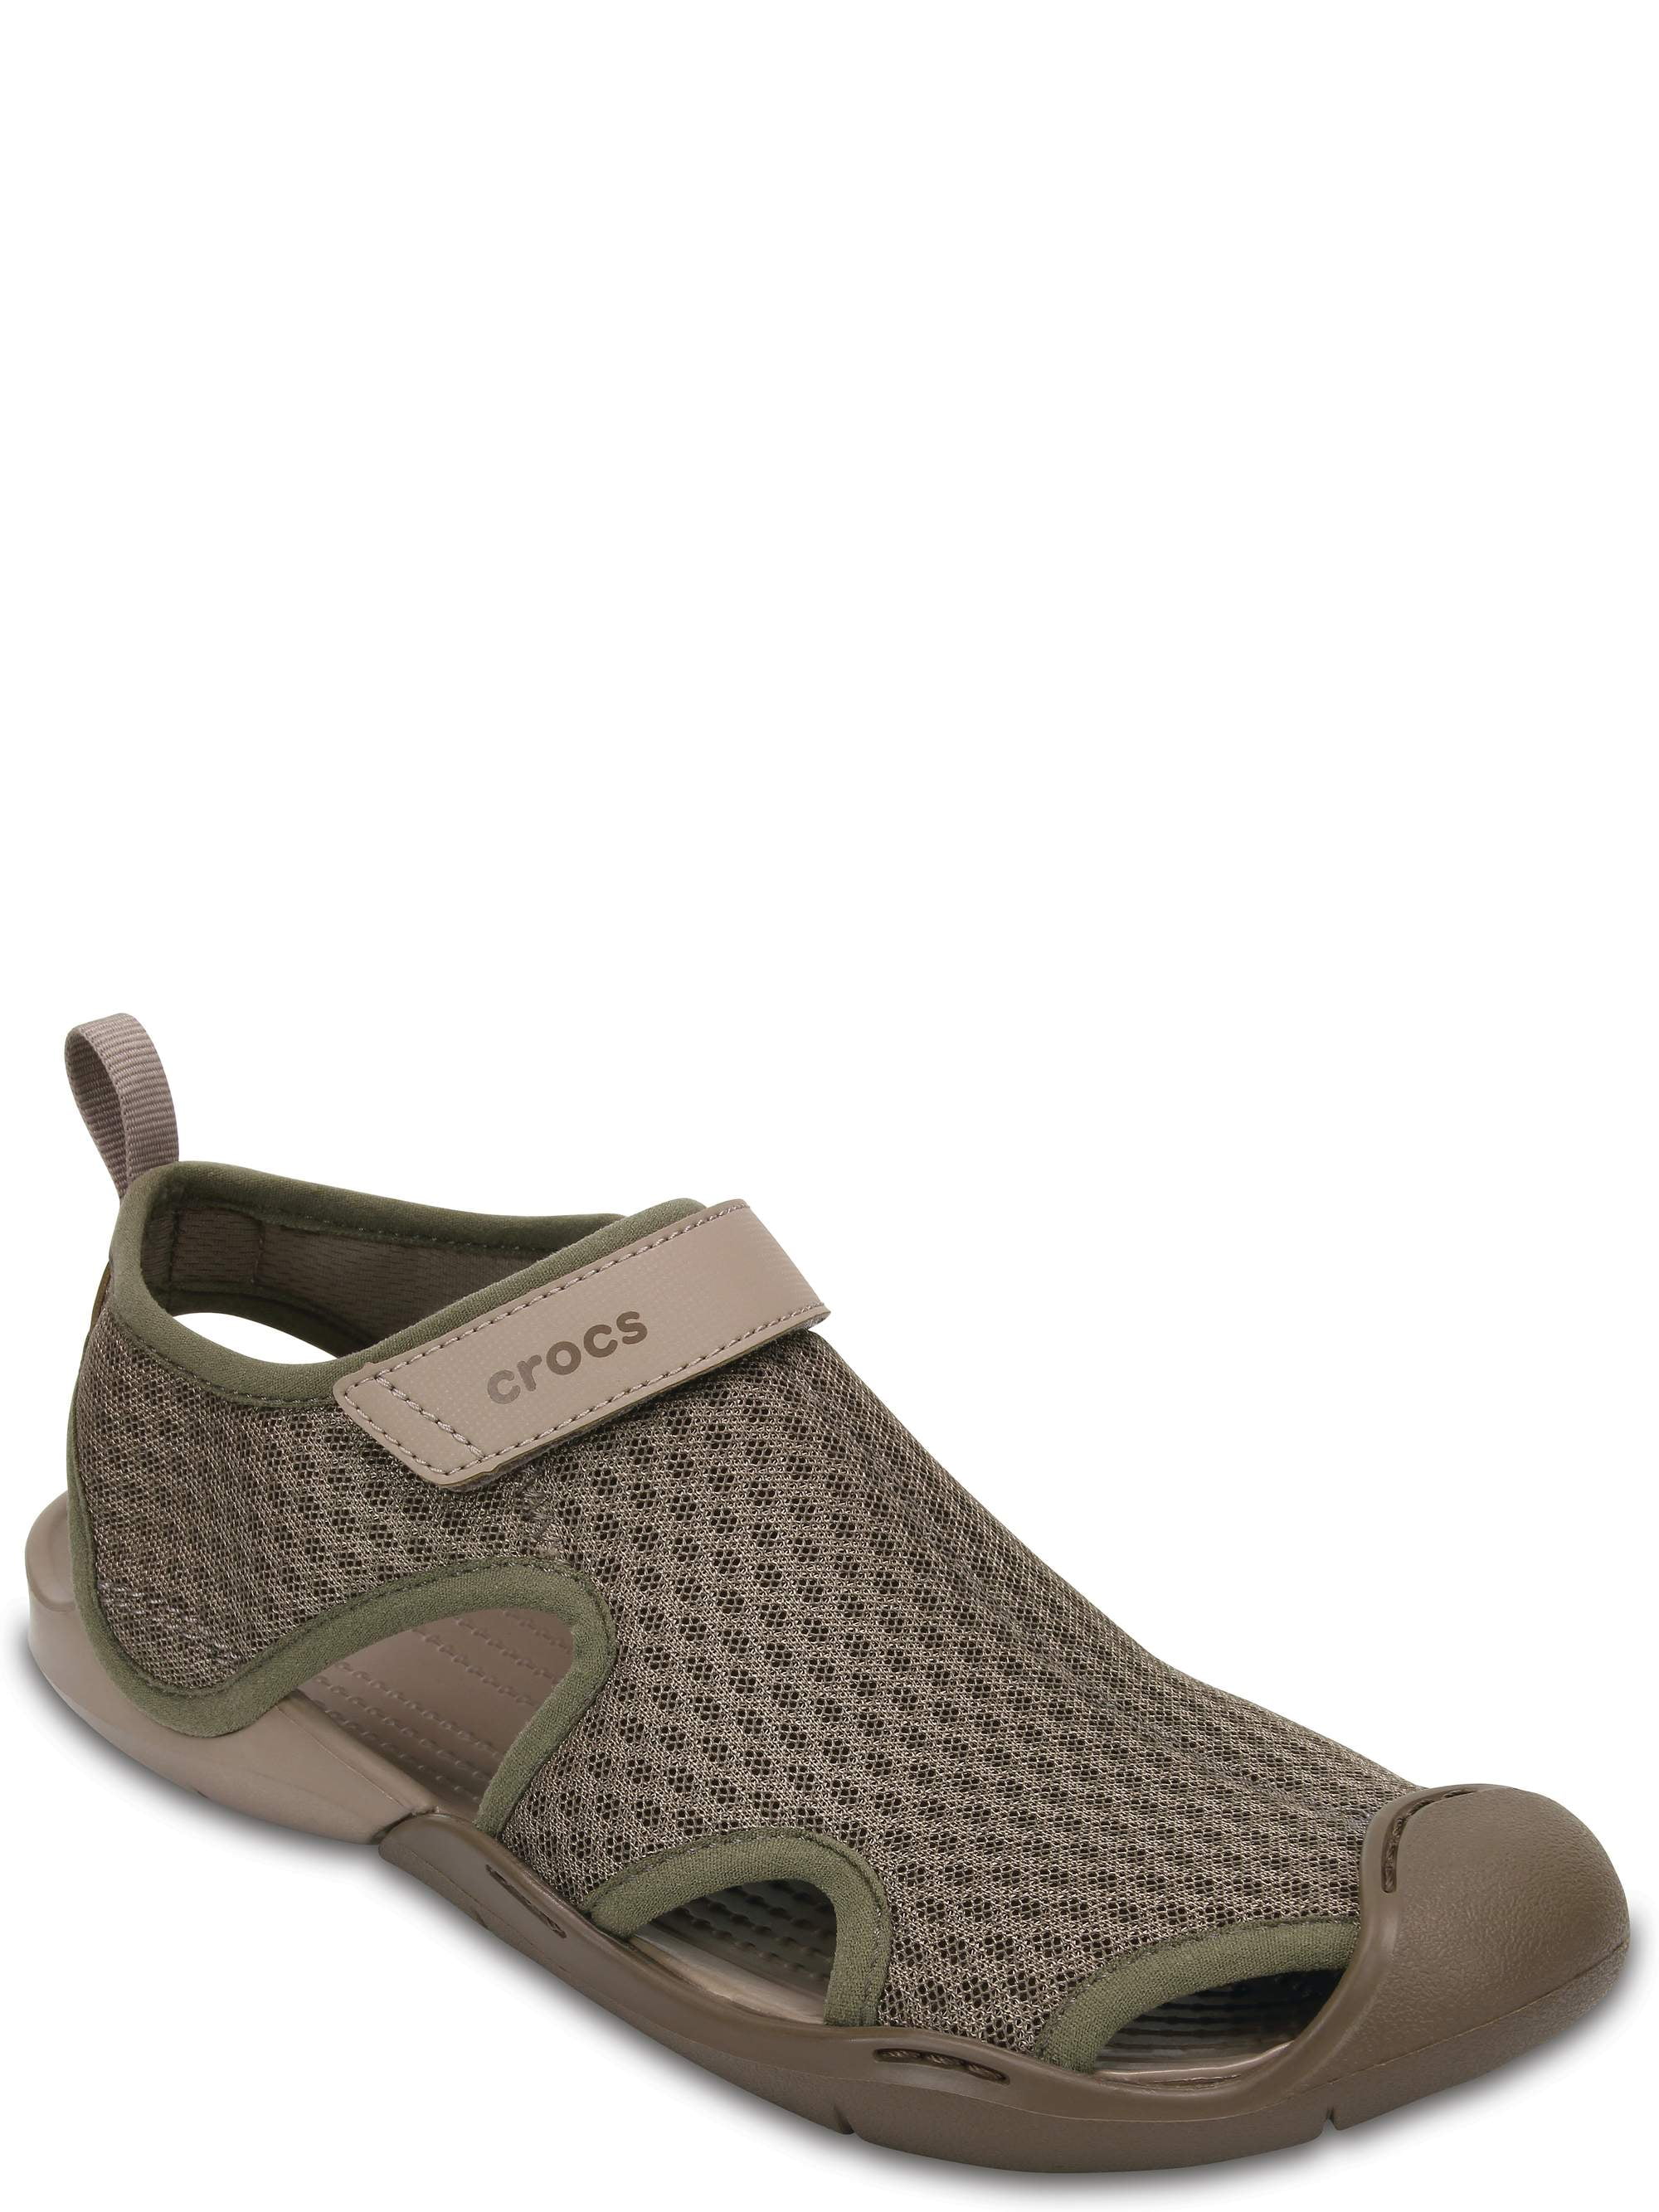 crocs swiftwater mesh sandals for ladies